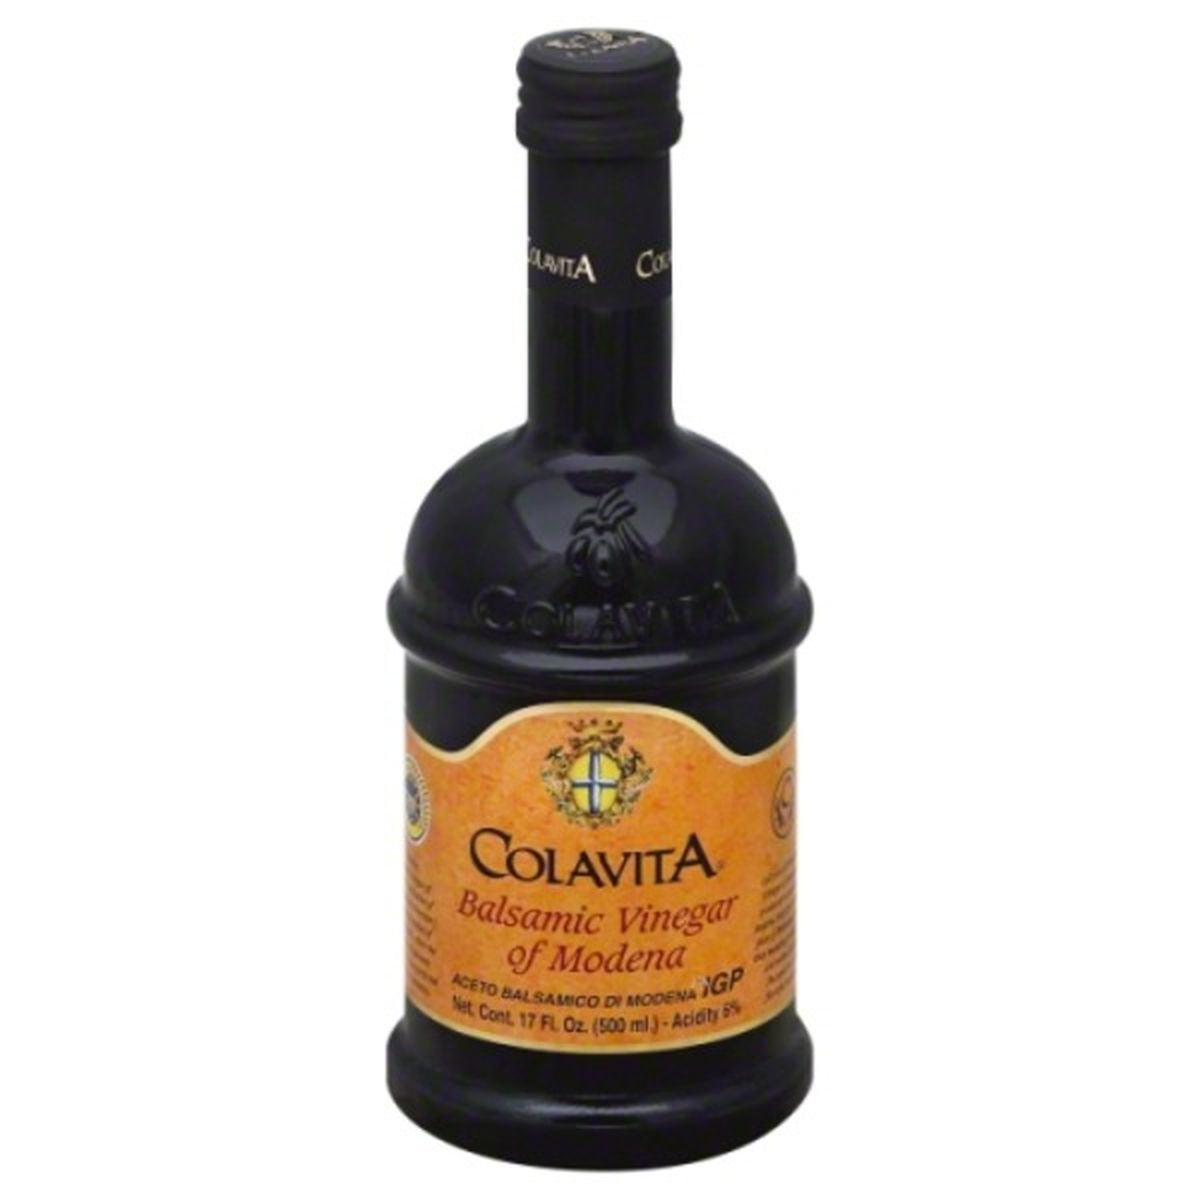 Calories in Colavita Balsamic Vinegar, of Modena